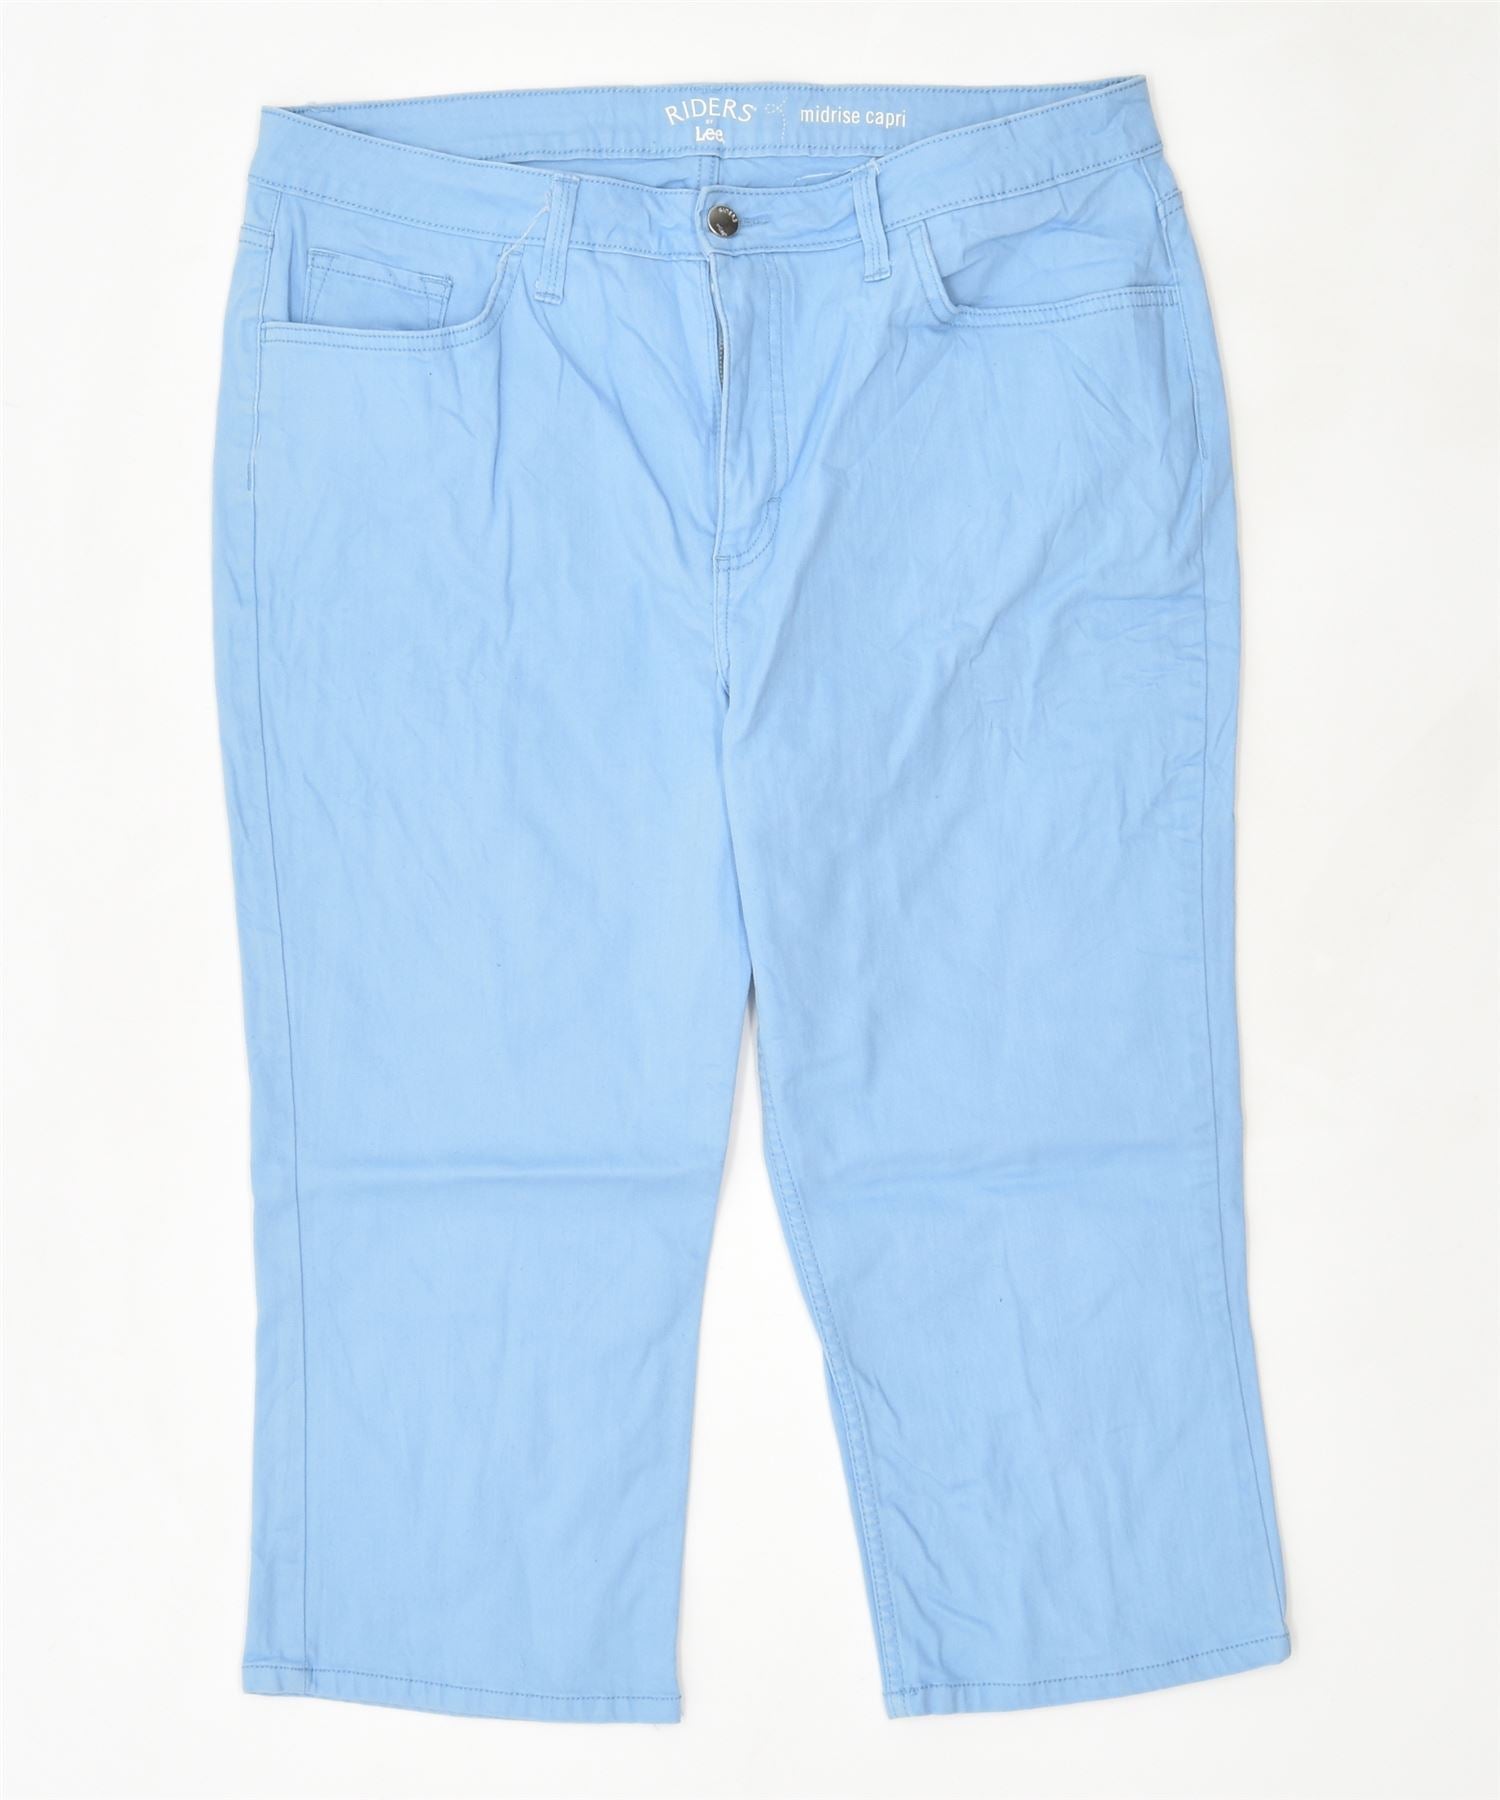 LEE Womens Riders Midrise Capri Trousers US 14 XL W34 L20 Blue Cotton, Vintage & Second-Hand Clothing Online